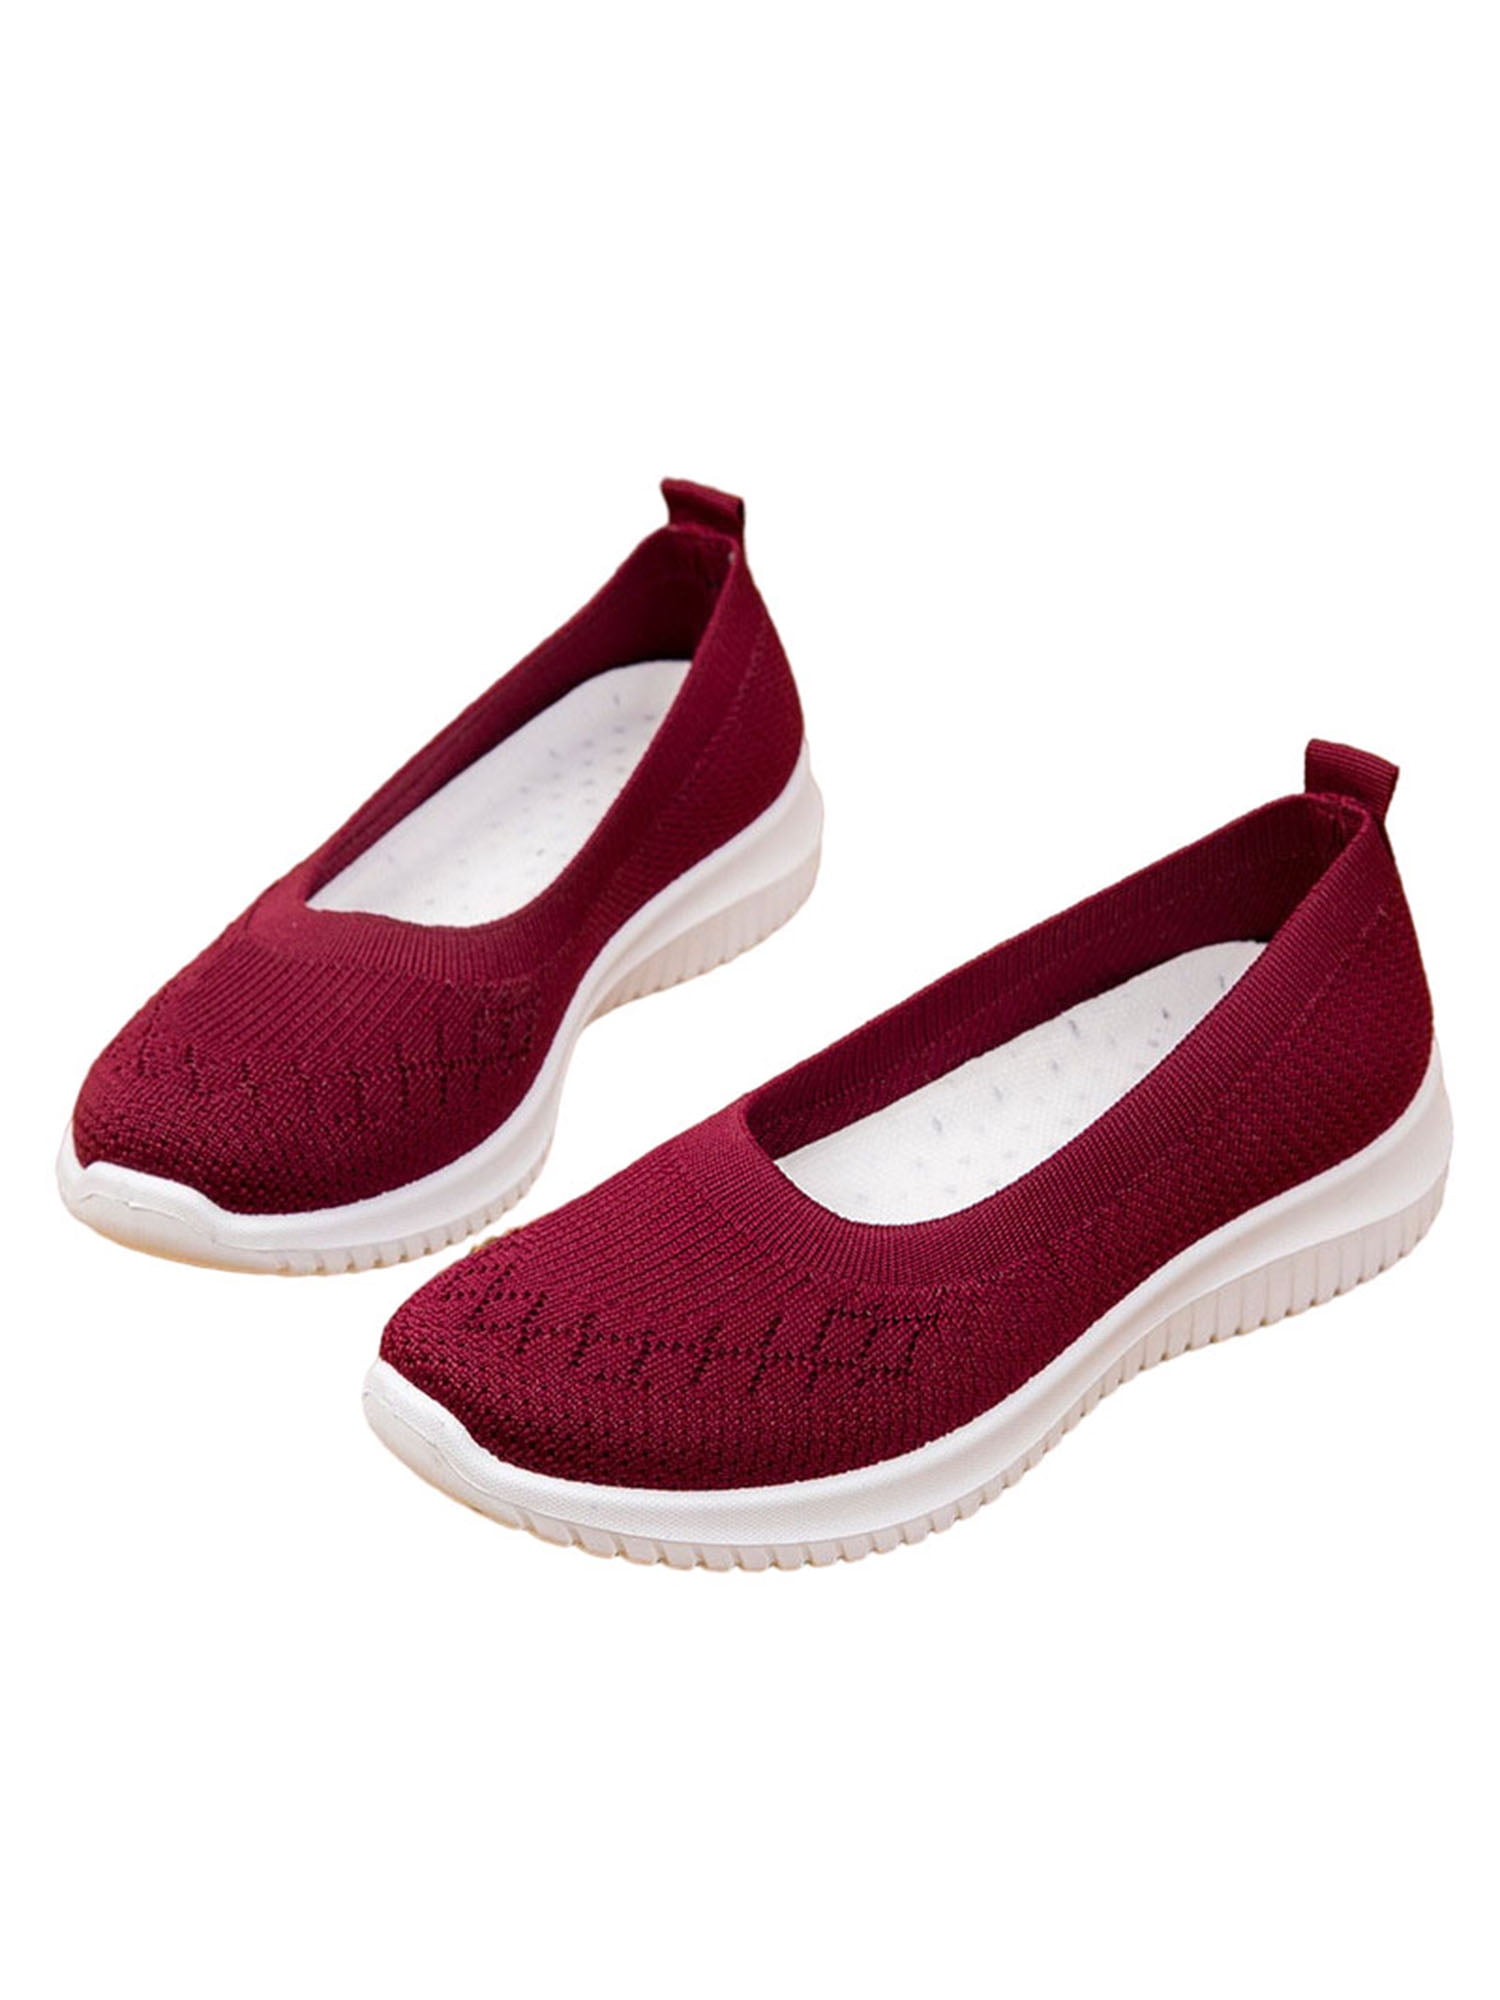 poemlady Women's Slip on Loafer Shoes Mesh Casual Flat Nurse Walking Sneakers 